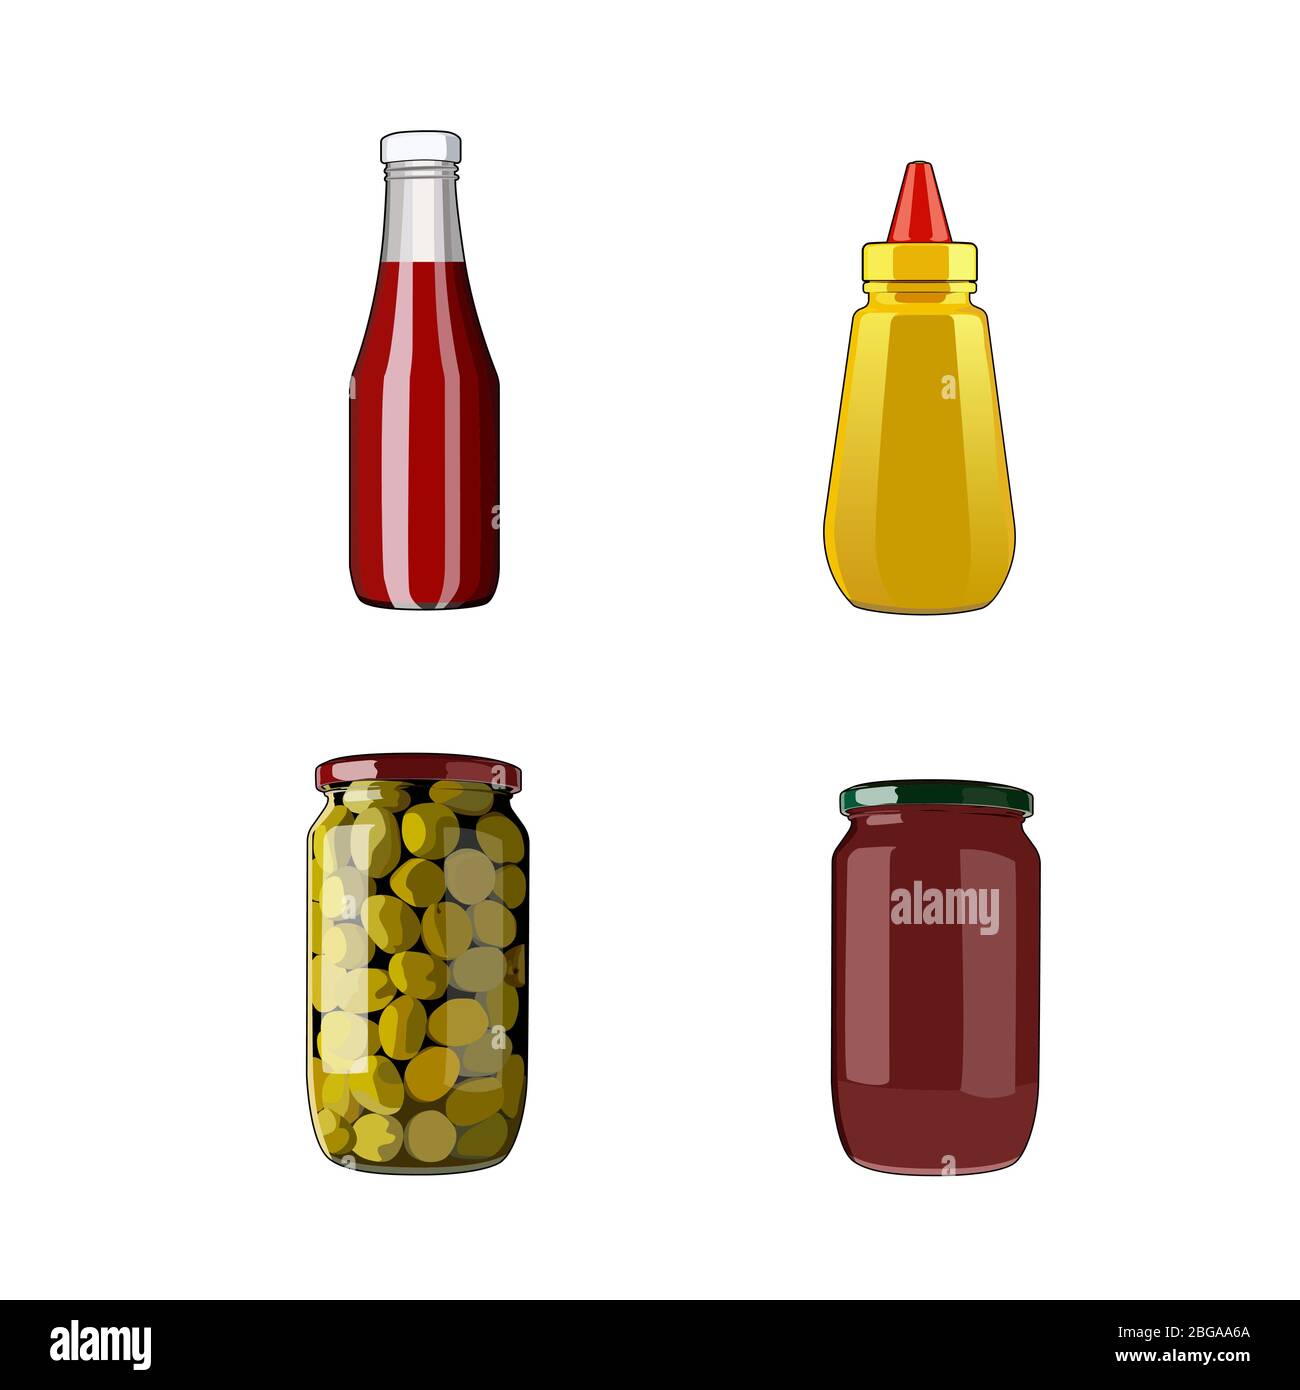 Set mit Würzsauce. Tomatenketchup, Senf, Bolognese-Sauce, Oliven im Glas.  Zutaten für die Lebensmittel. Vektorgrafik Illustration Stock-Vektorgrafik  - Alamy